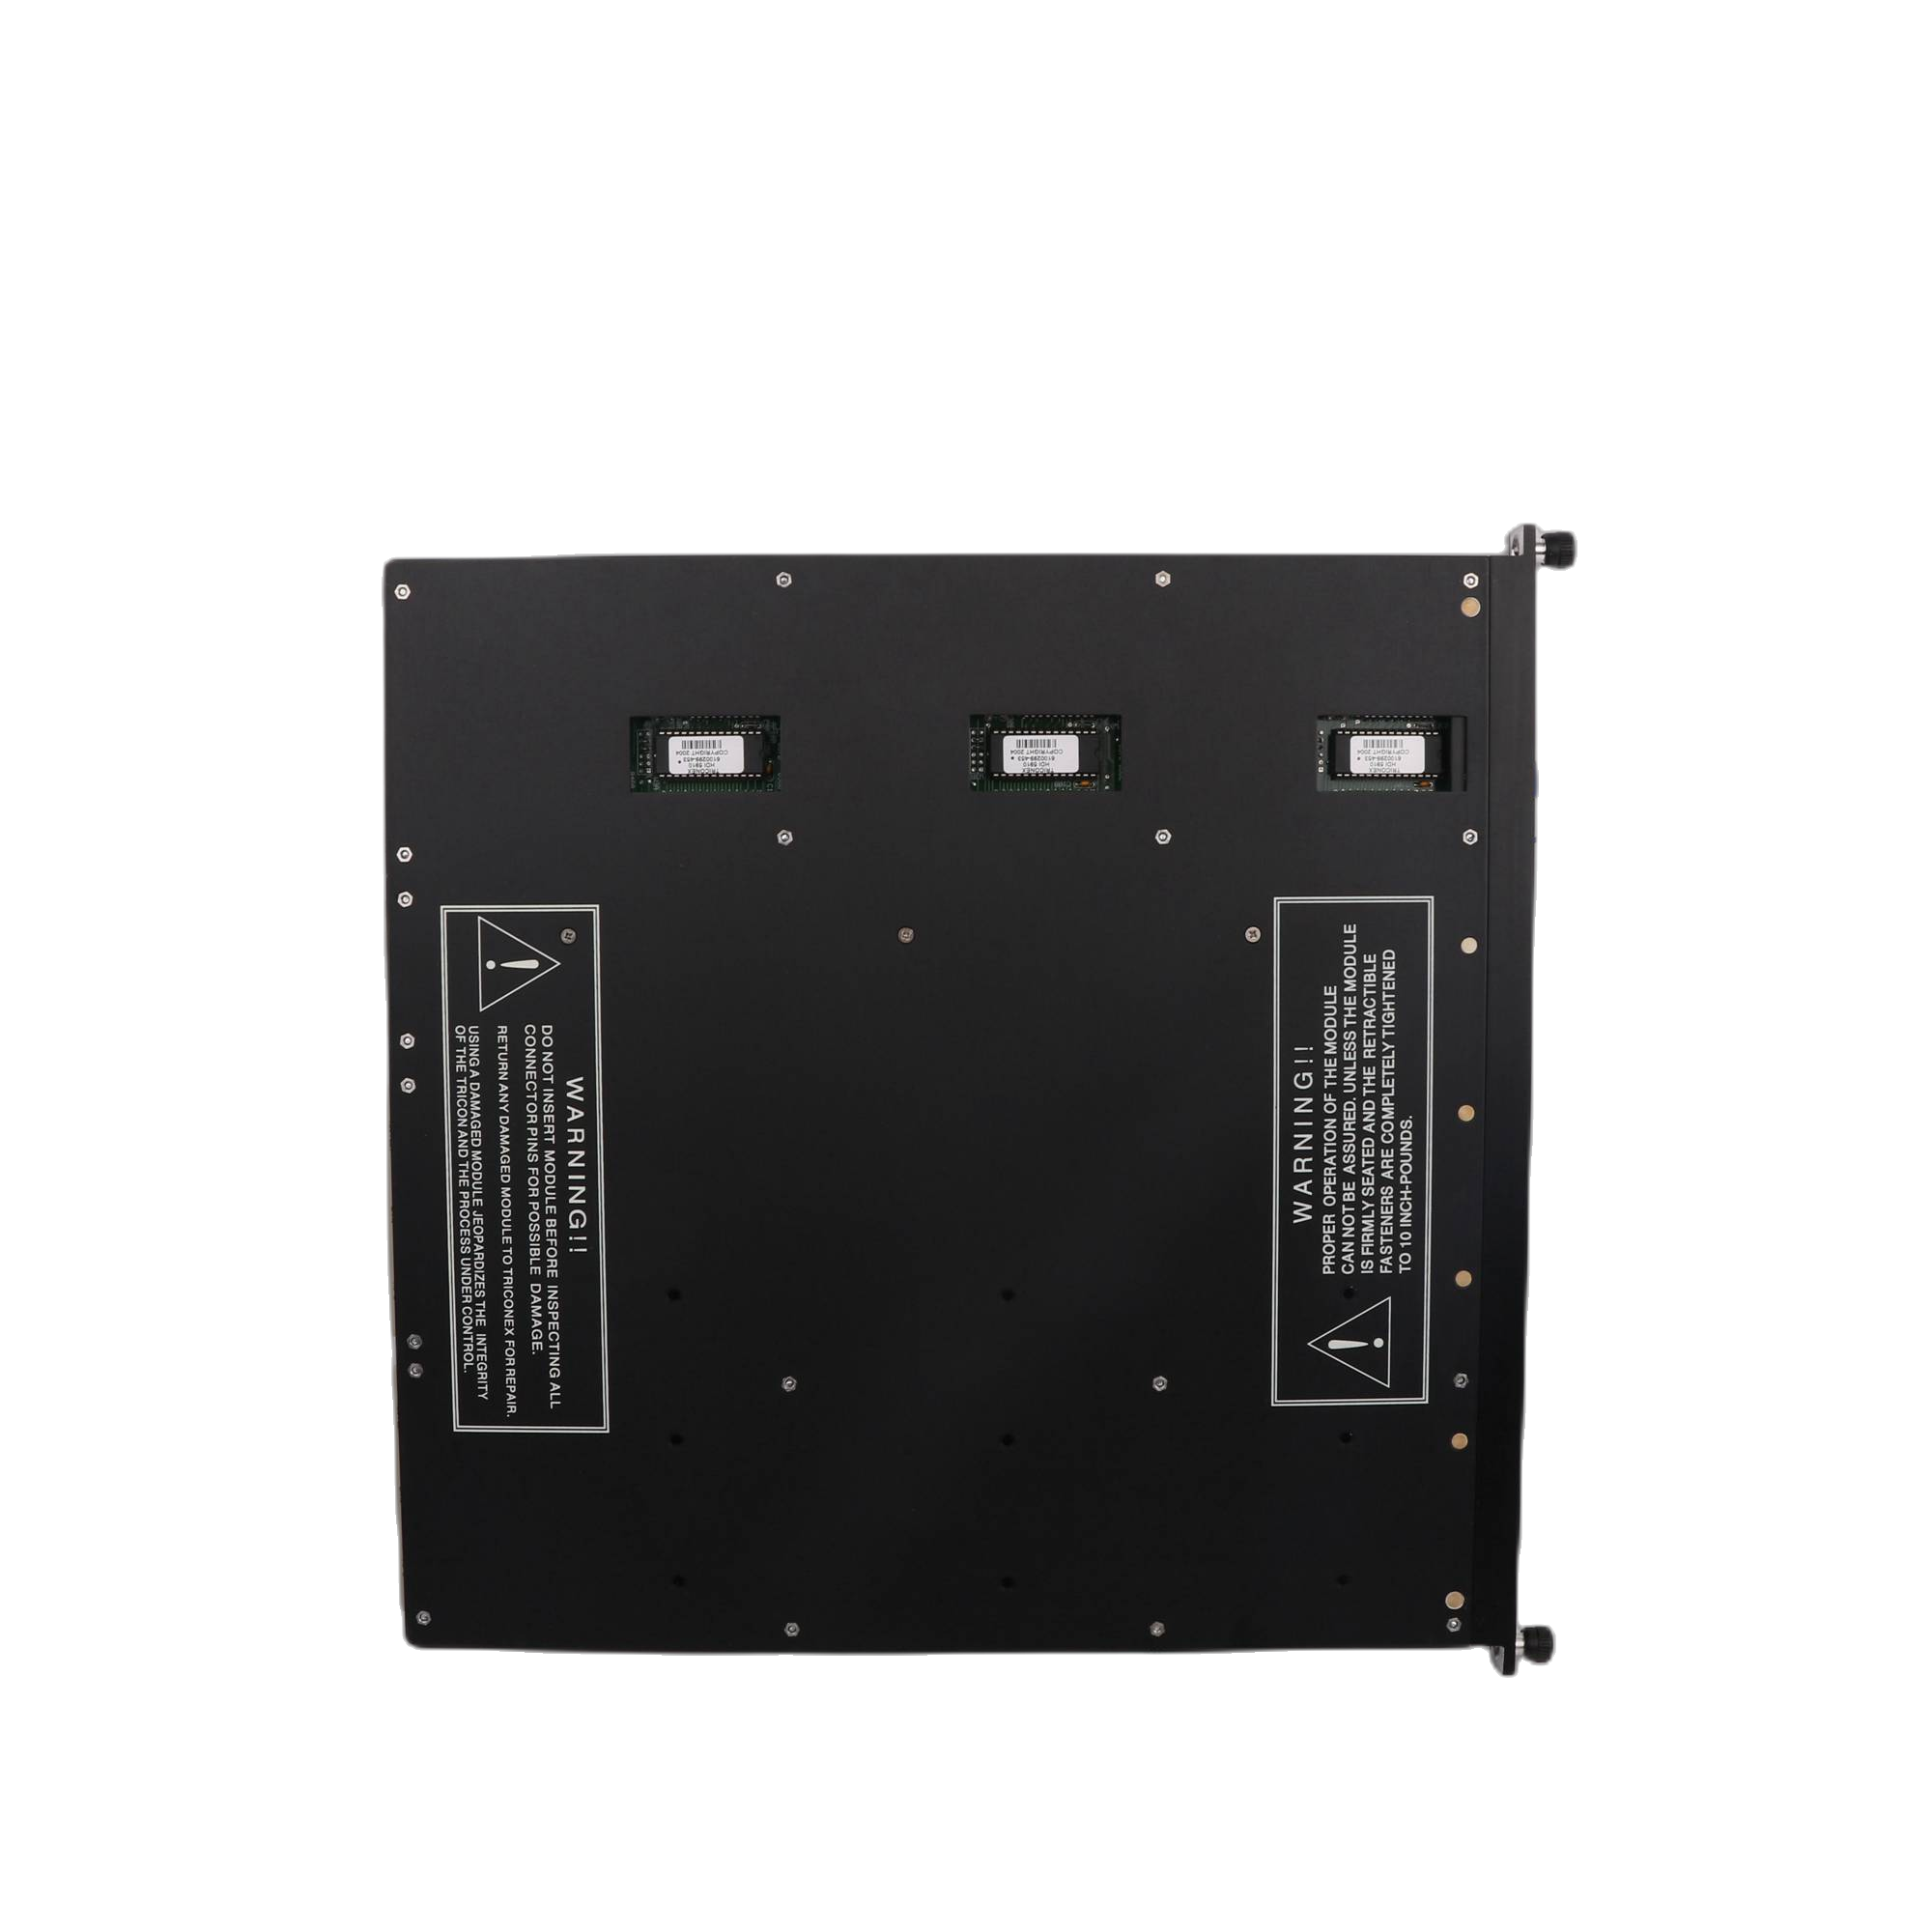 TRICONEX 英维思3504E 通讯模块 控制器 工业自动化系统备件